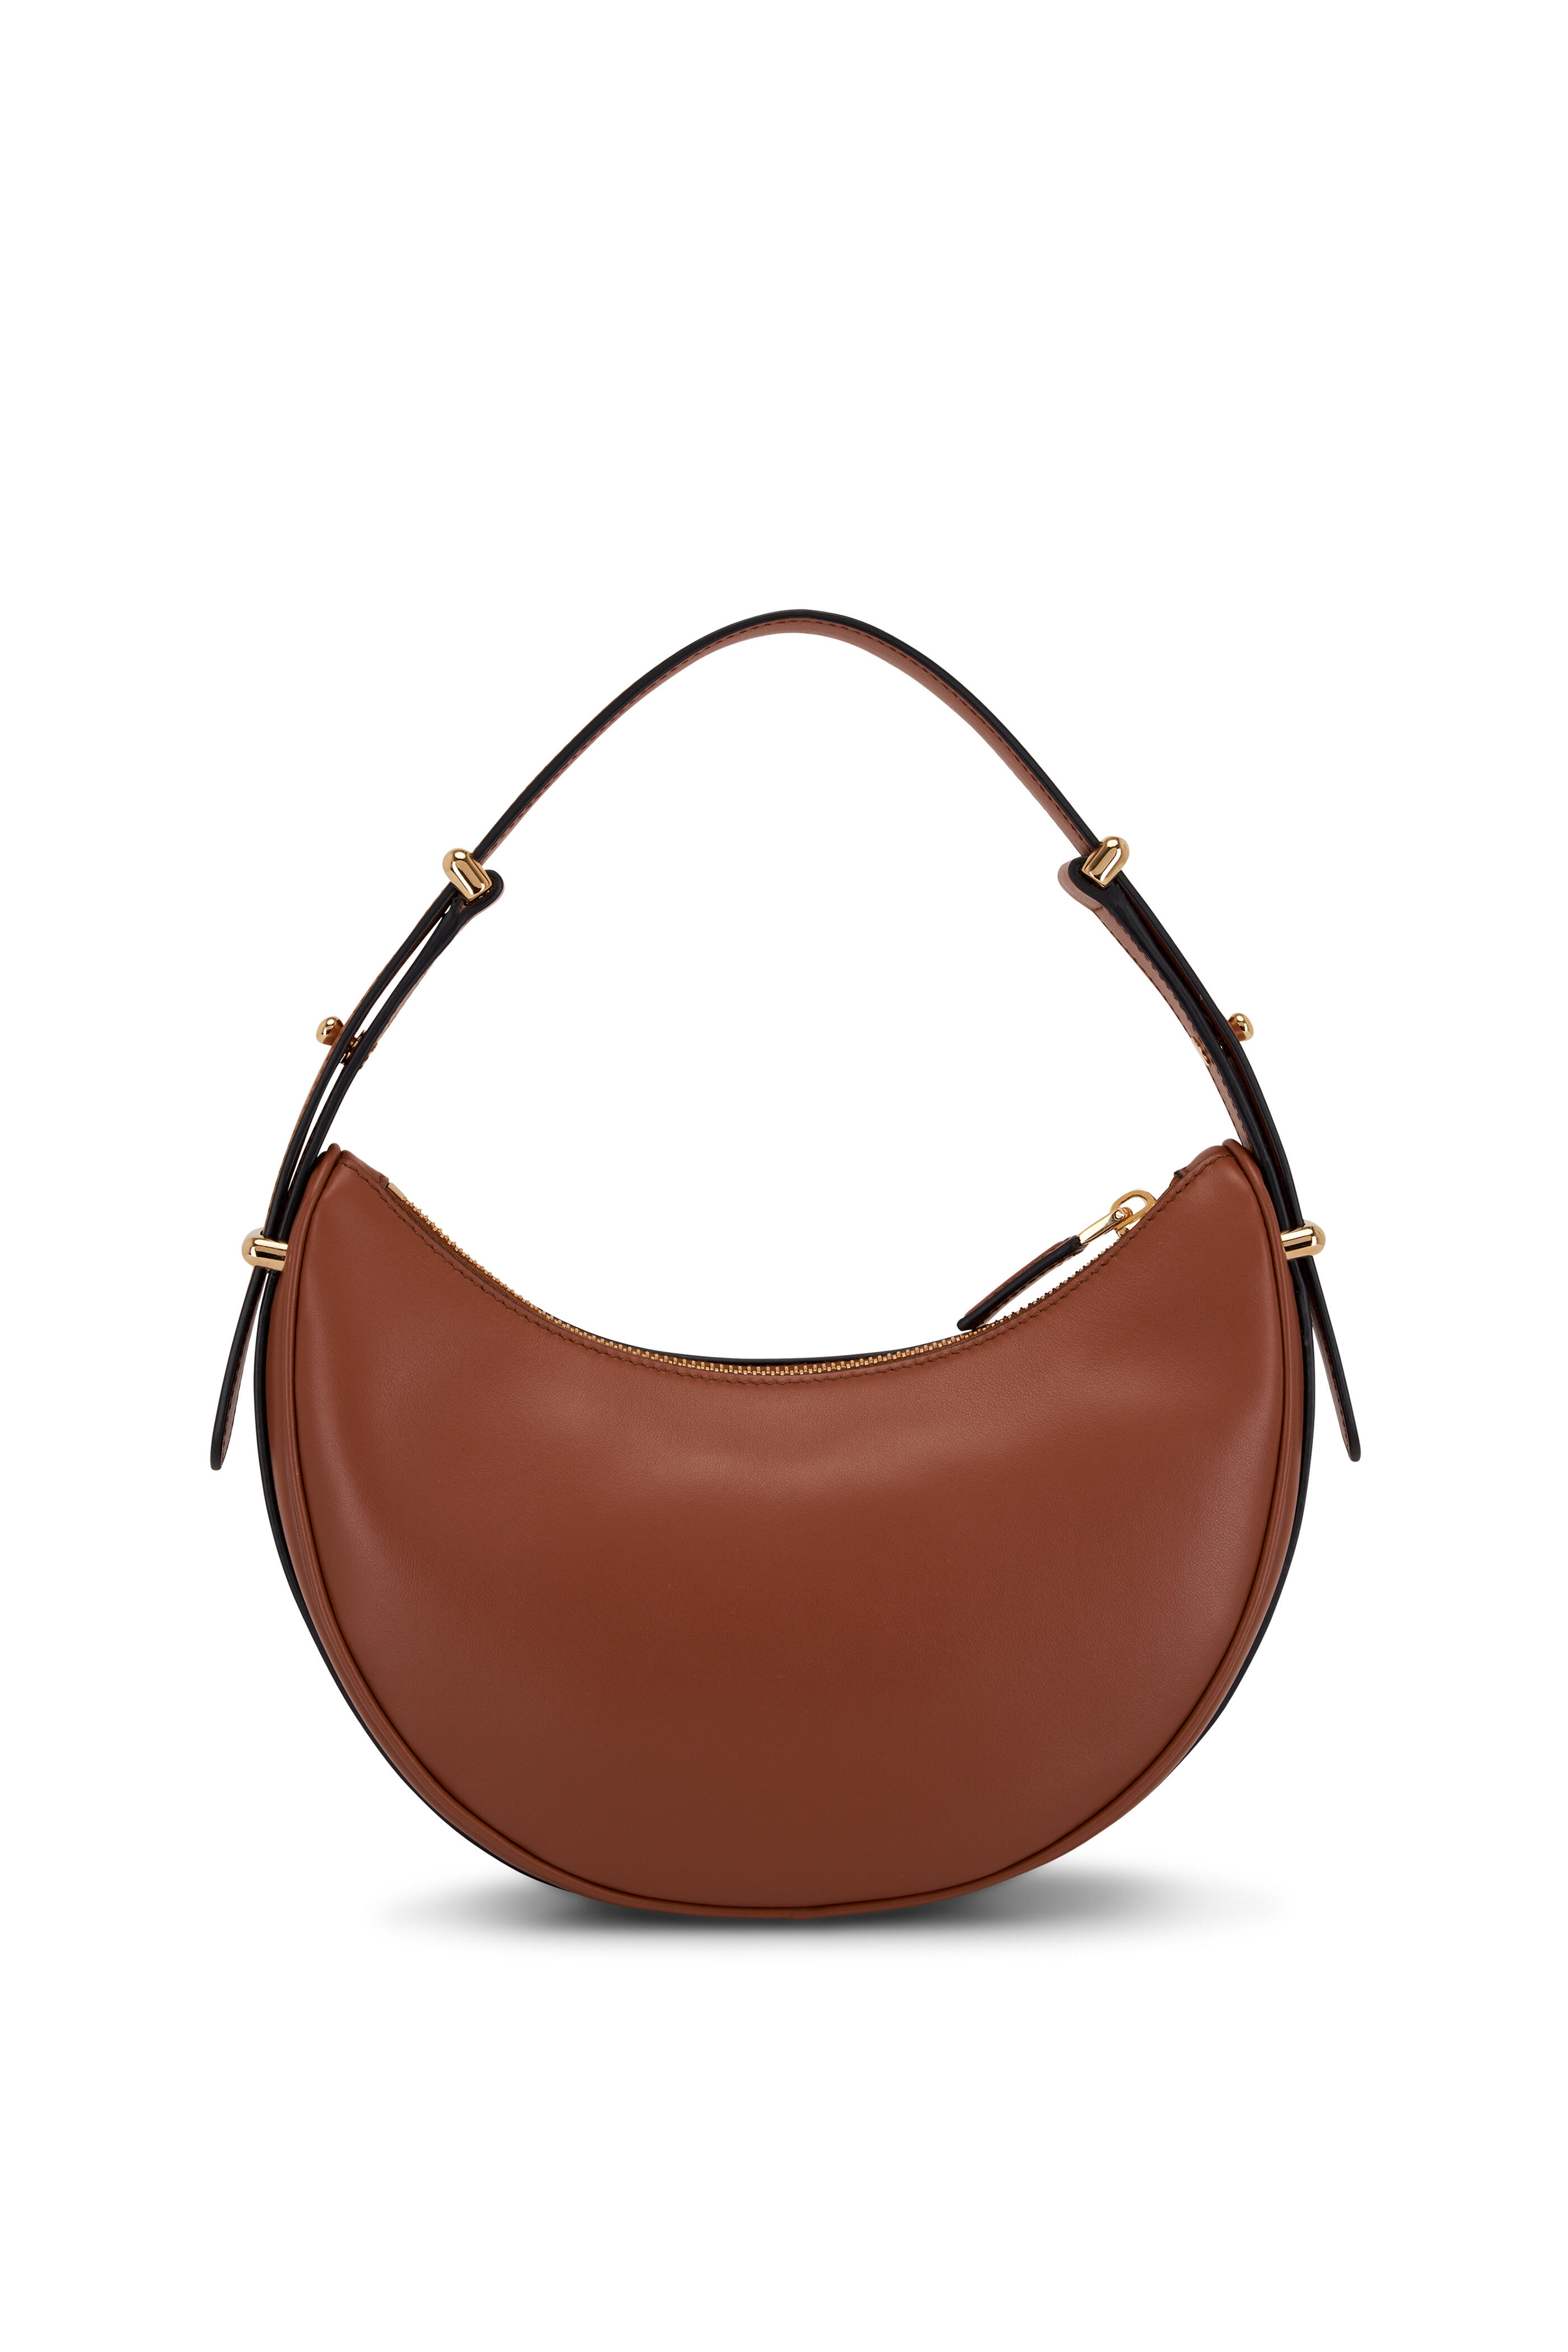 Prada Women's Cipria Saffiano Leather Mini Chain Shoulder Bag | by Mitchell Stores